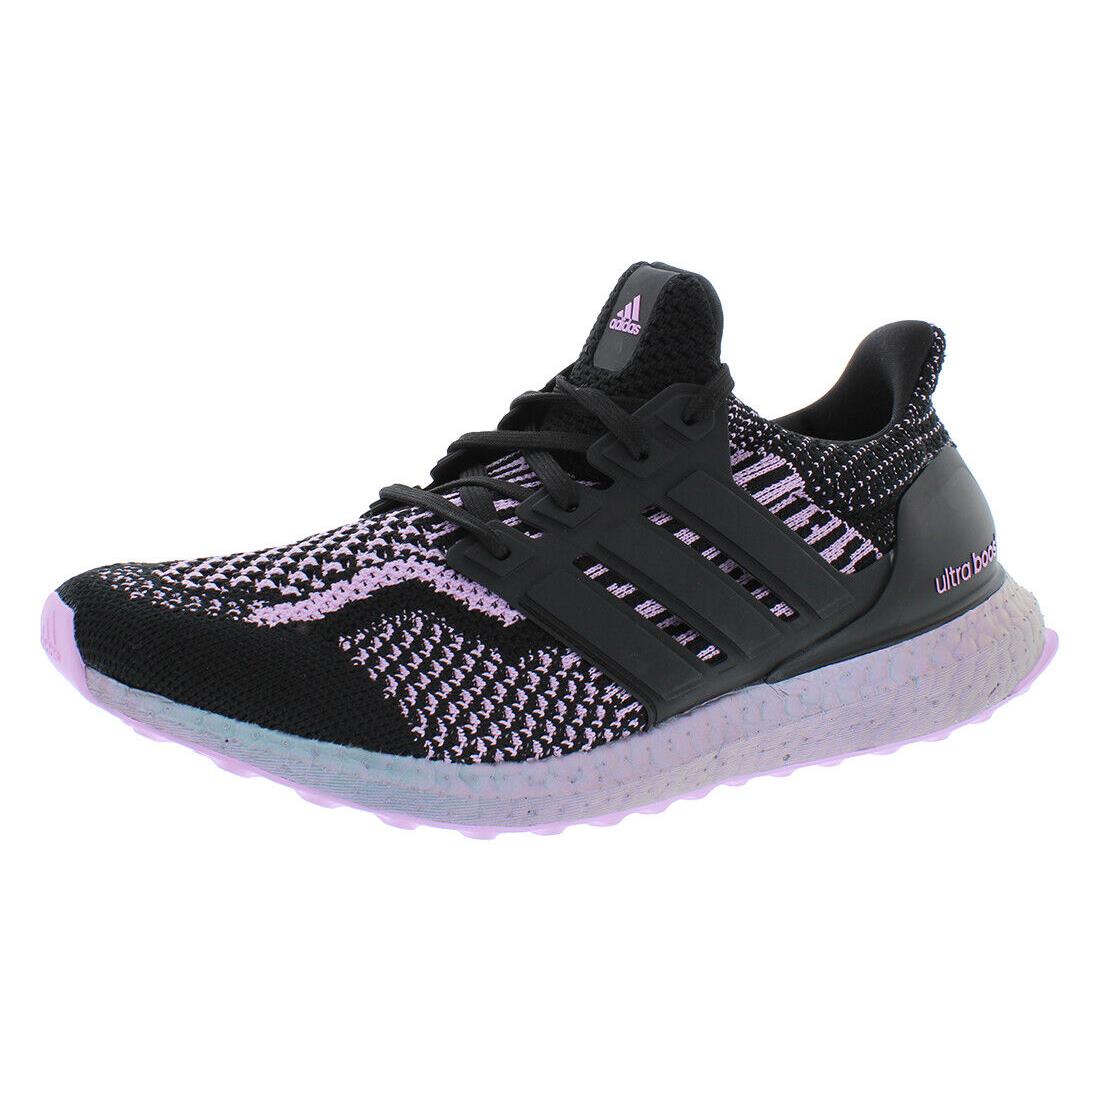 Adidas Ultraboost 5.0 Dna Womens Shoes - Black/Purple, Main: Black